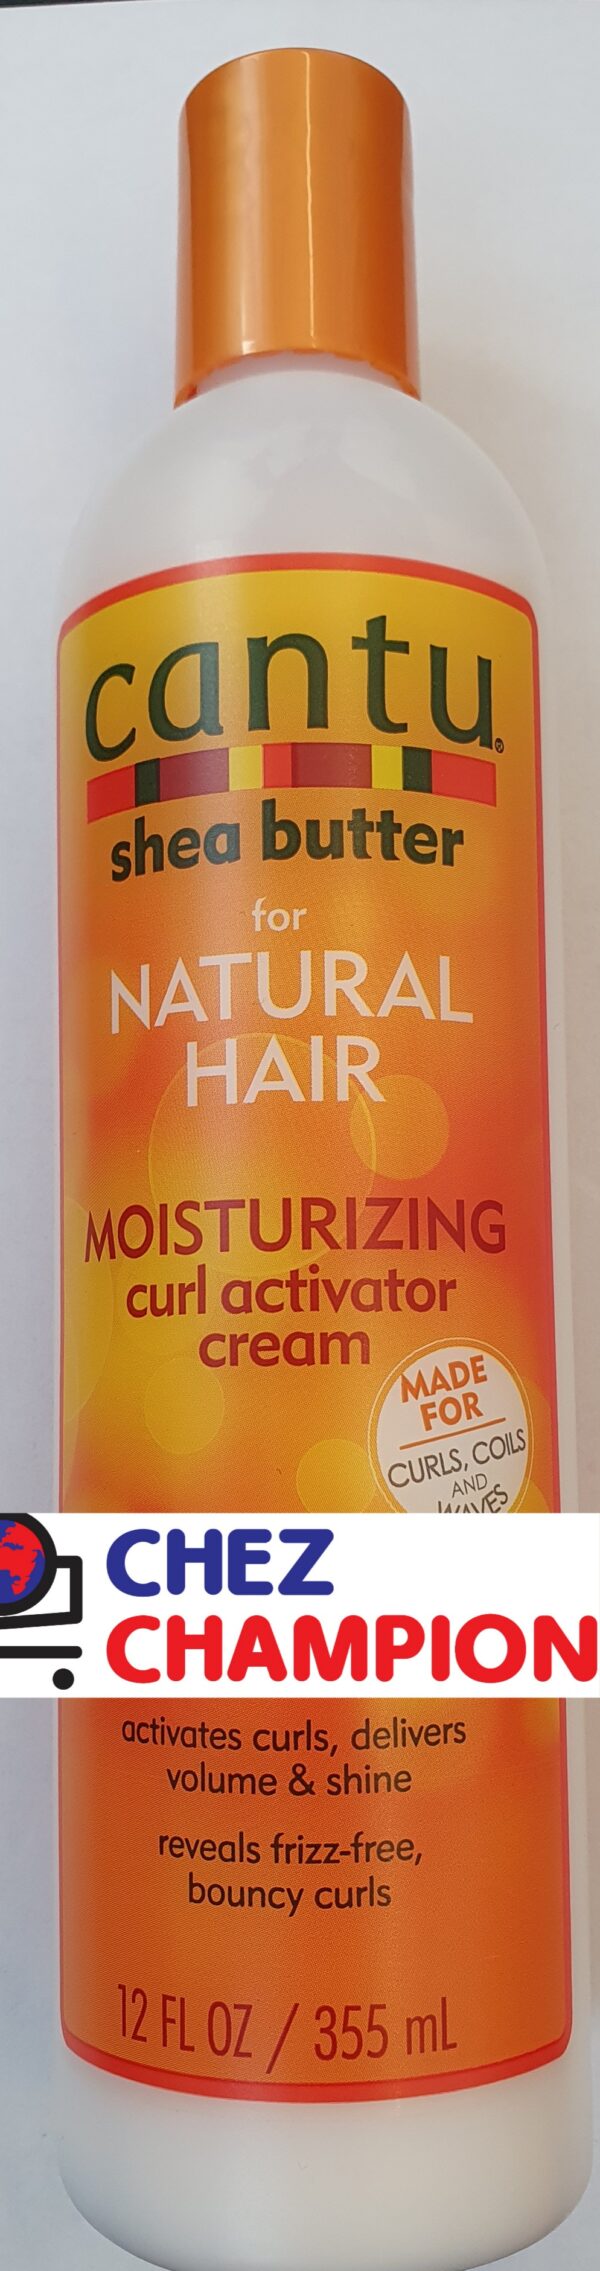 Cantu shea butter for natural hair moisturizing curl activator cream – 355ml